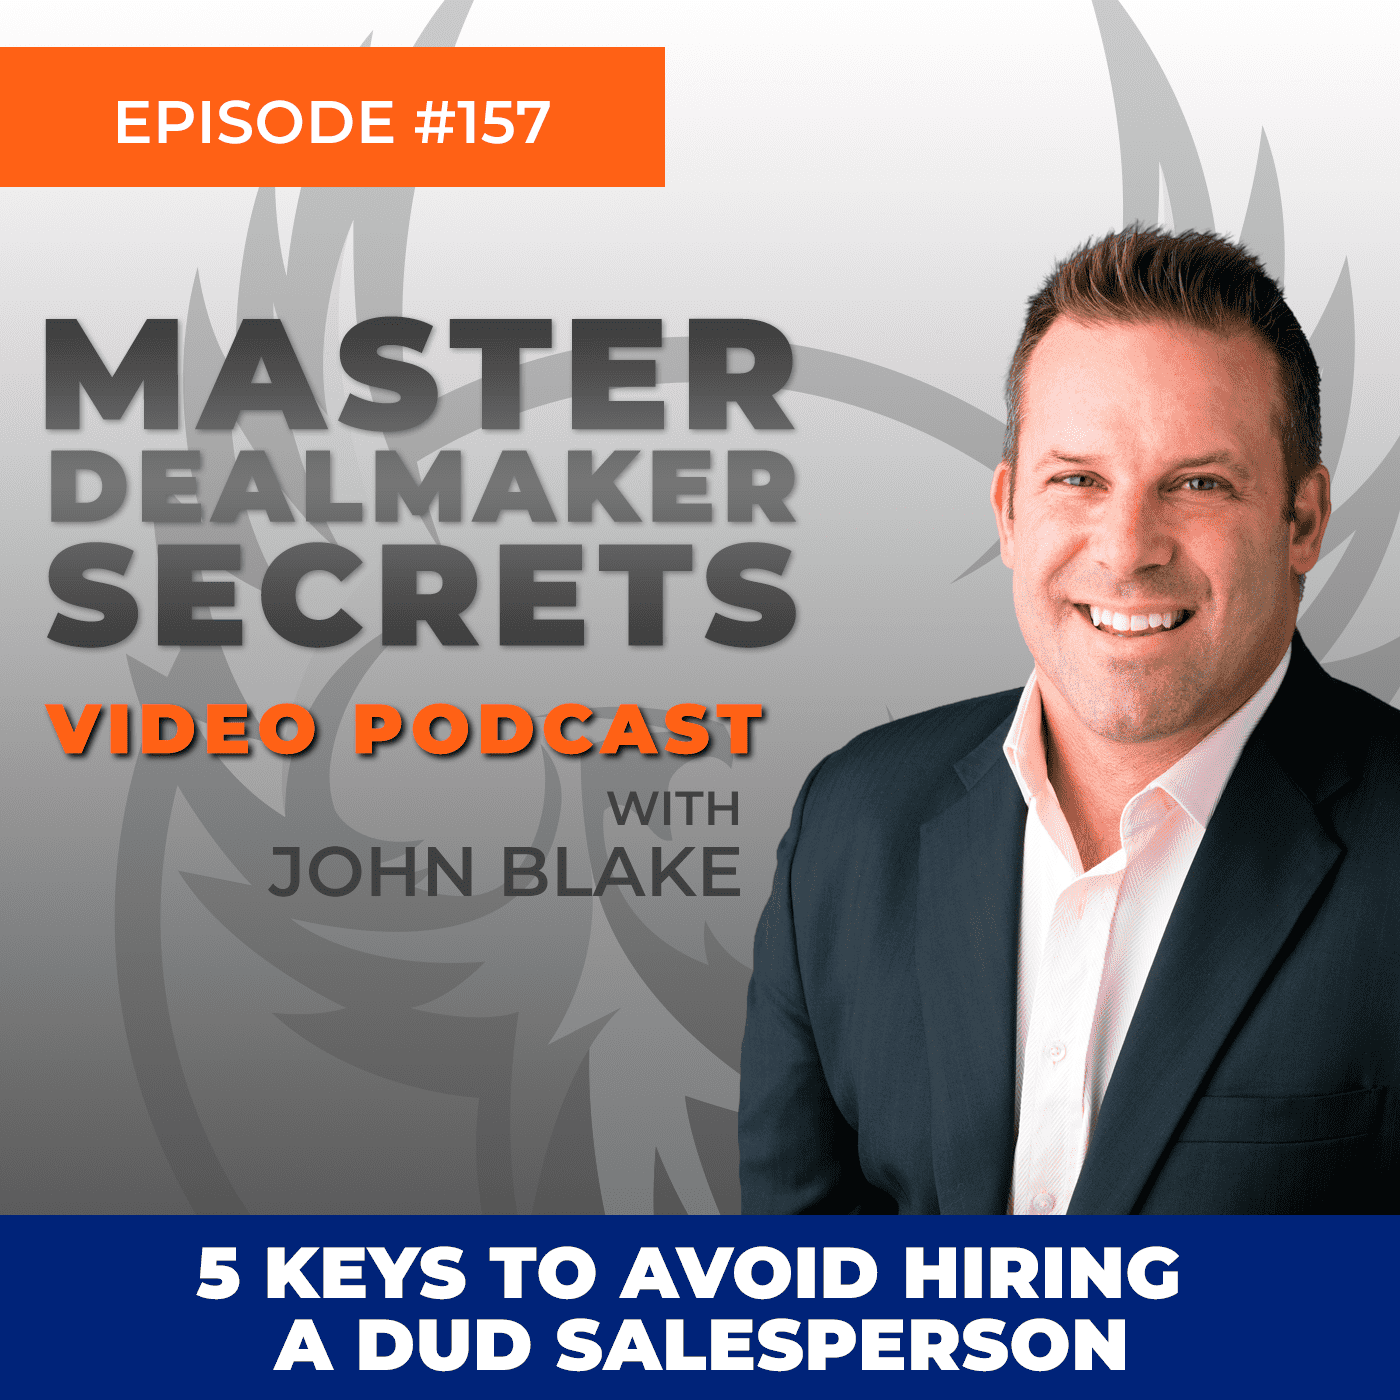 John Blake 5 Keys to Avoid Hiring a Dud Salesperson